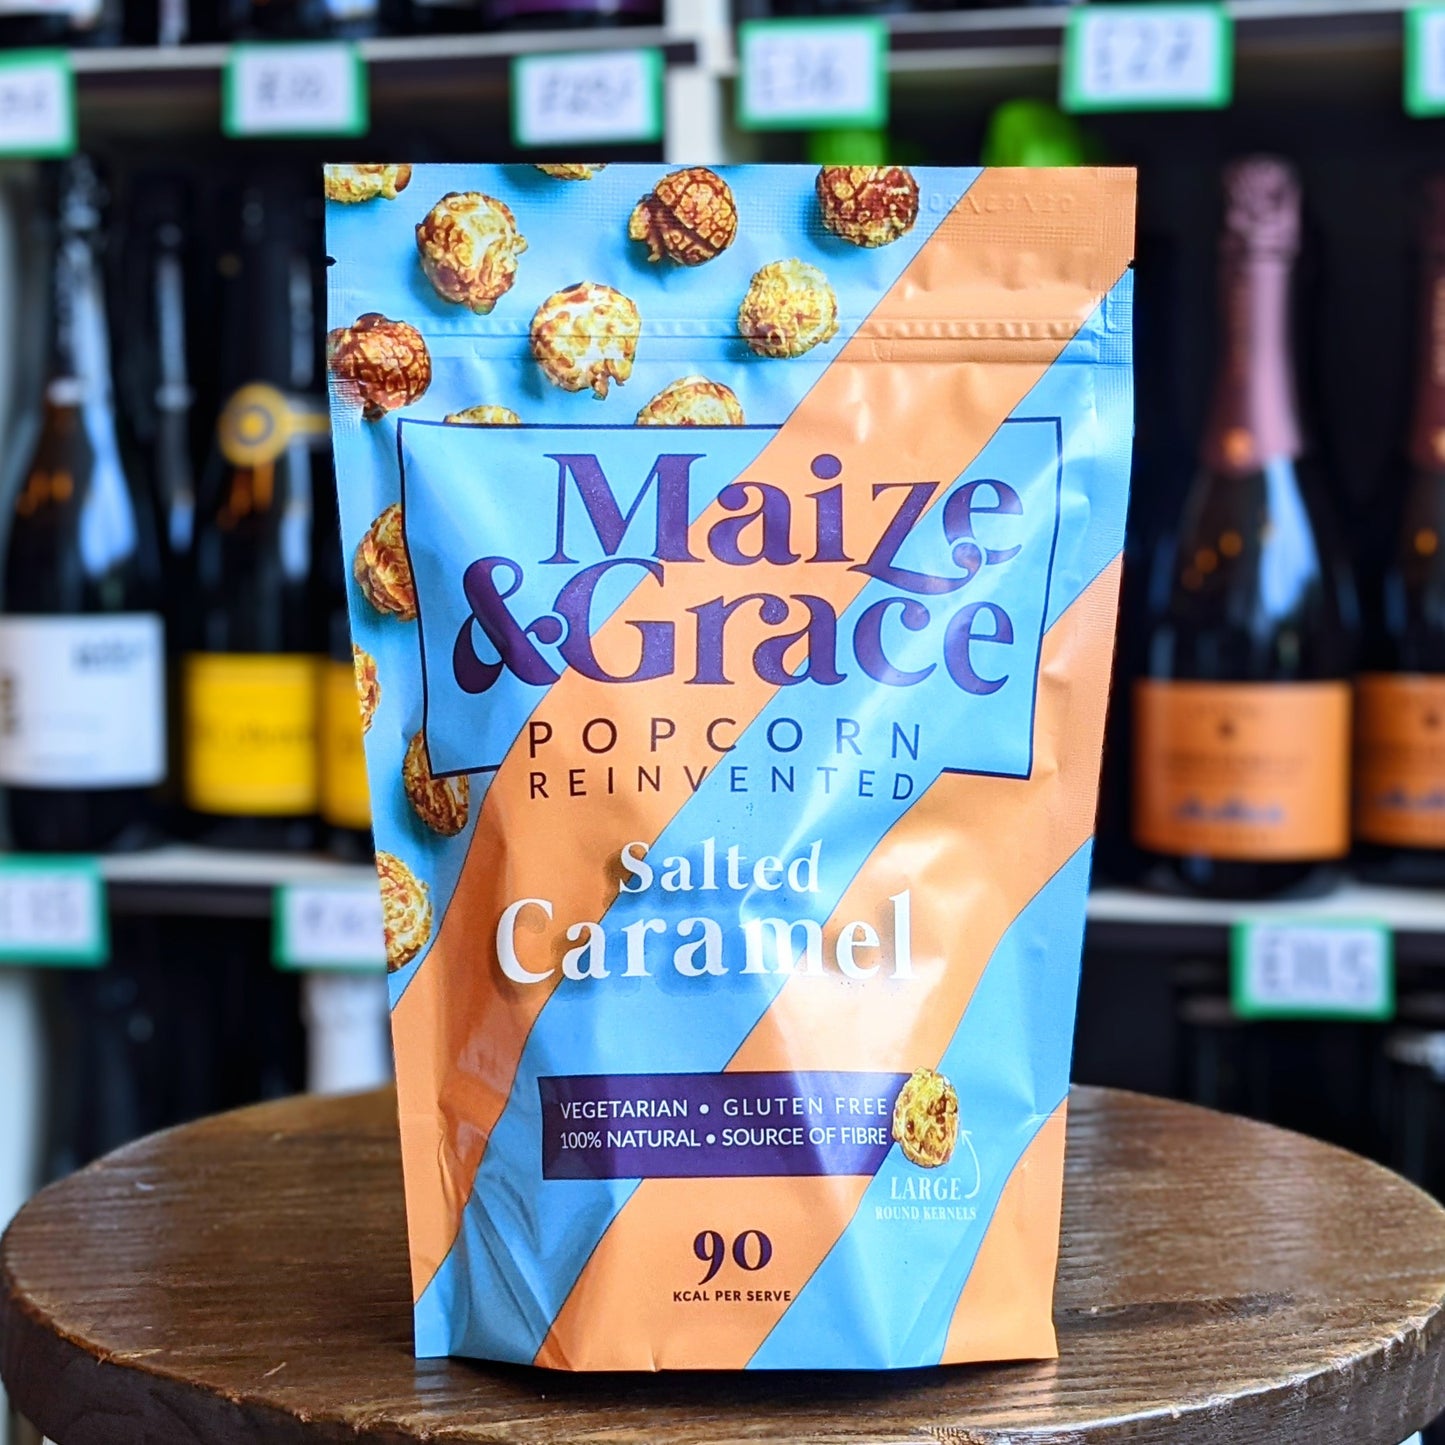 Maize & Grace Popcorn, London, England